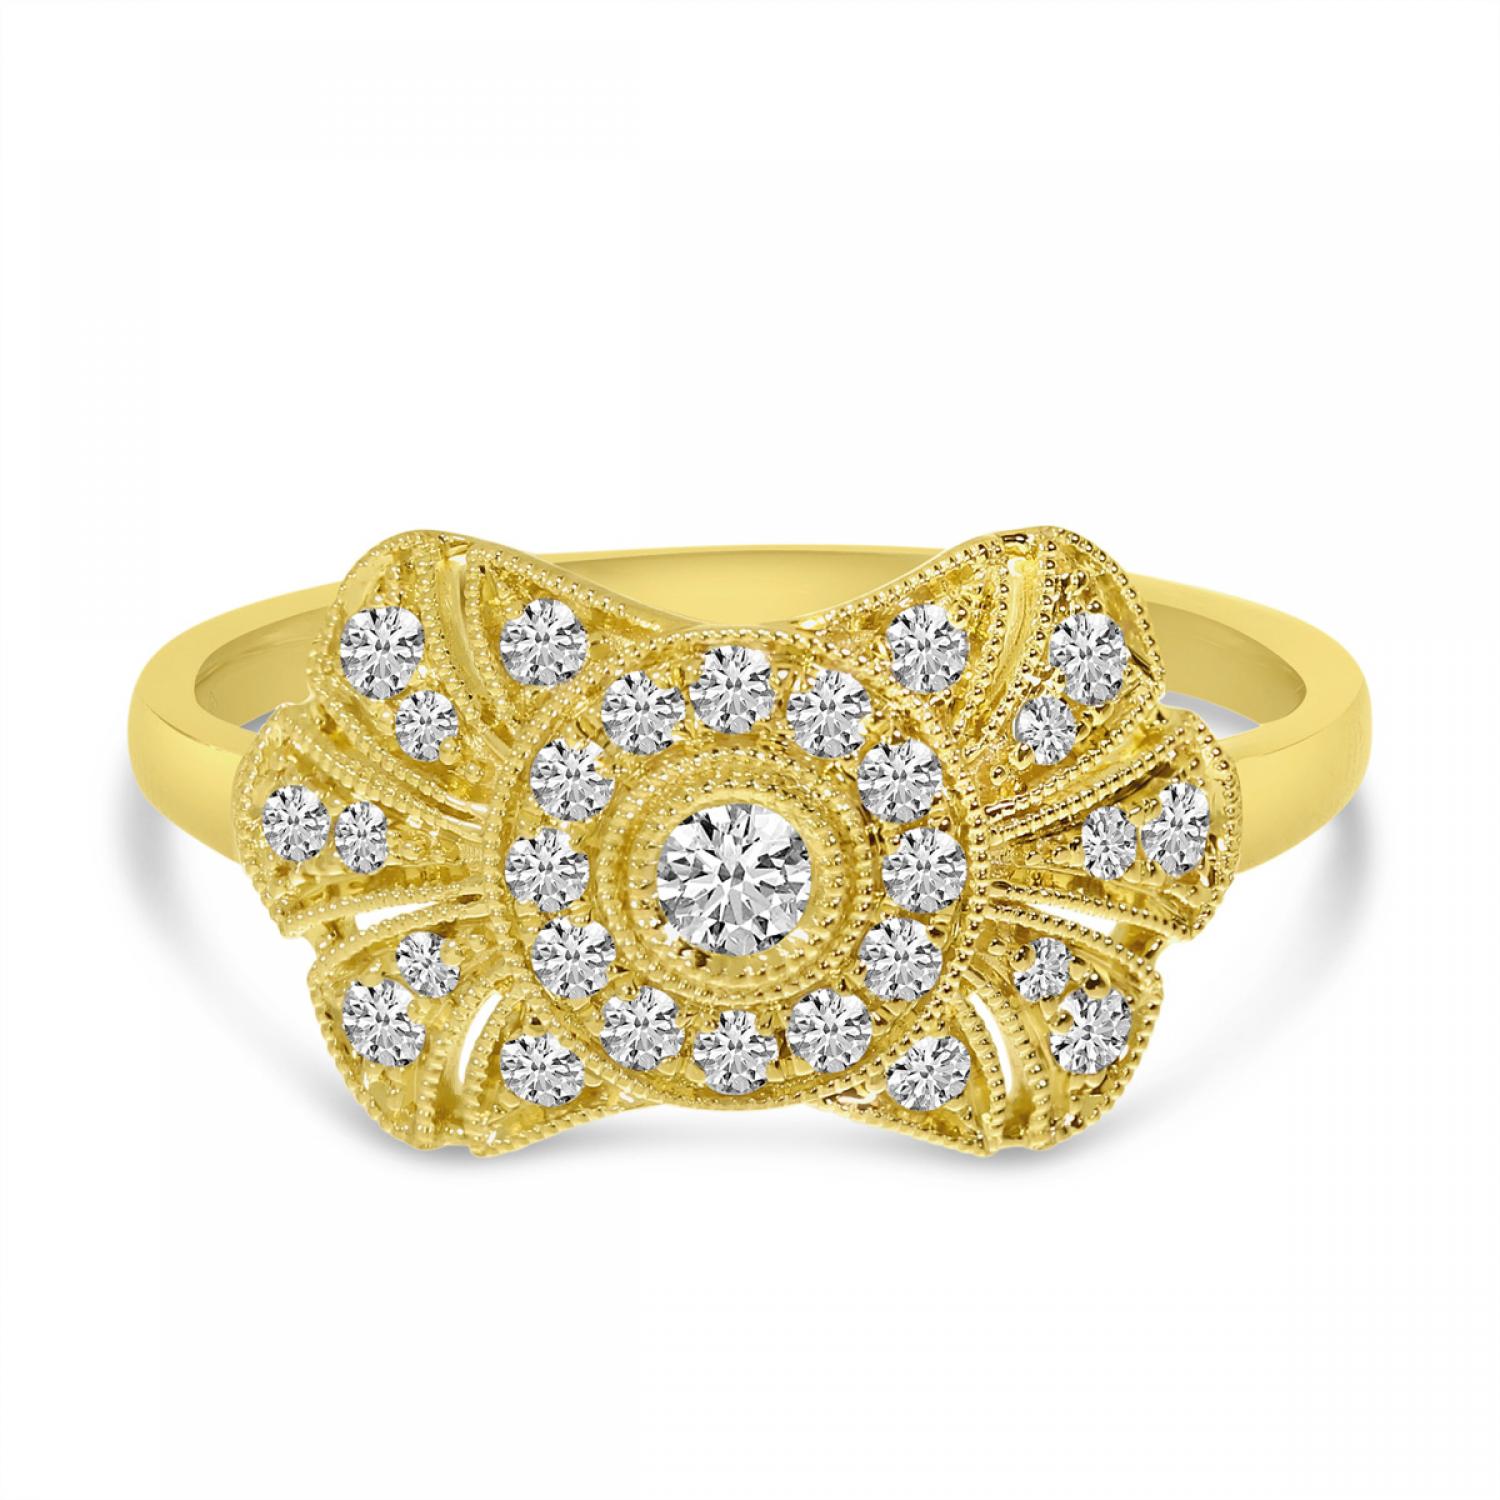 14K Yellow Gold East West Diamond Art Deco Ring